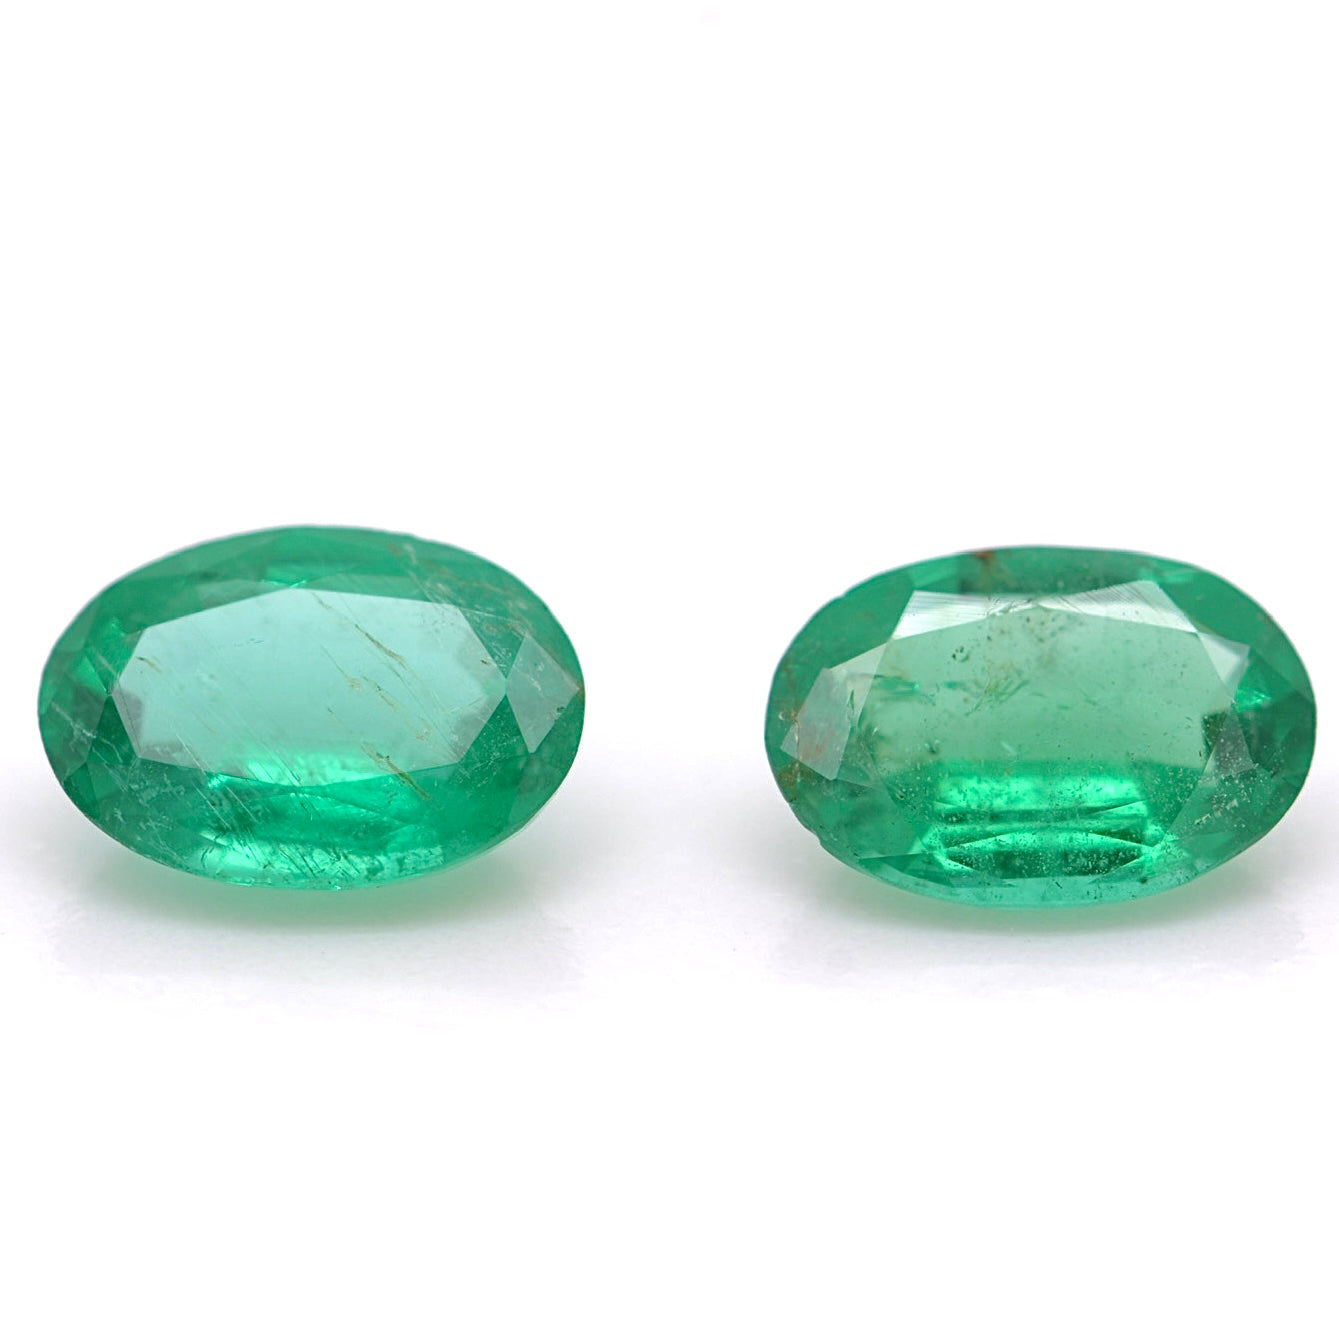 Emerald green gemstone jewelry oval cut two pair